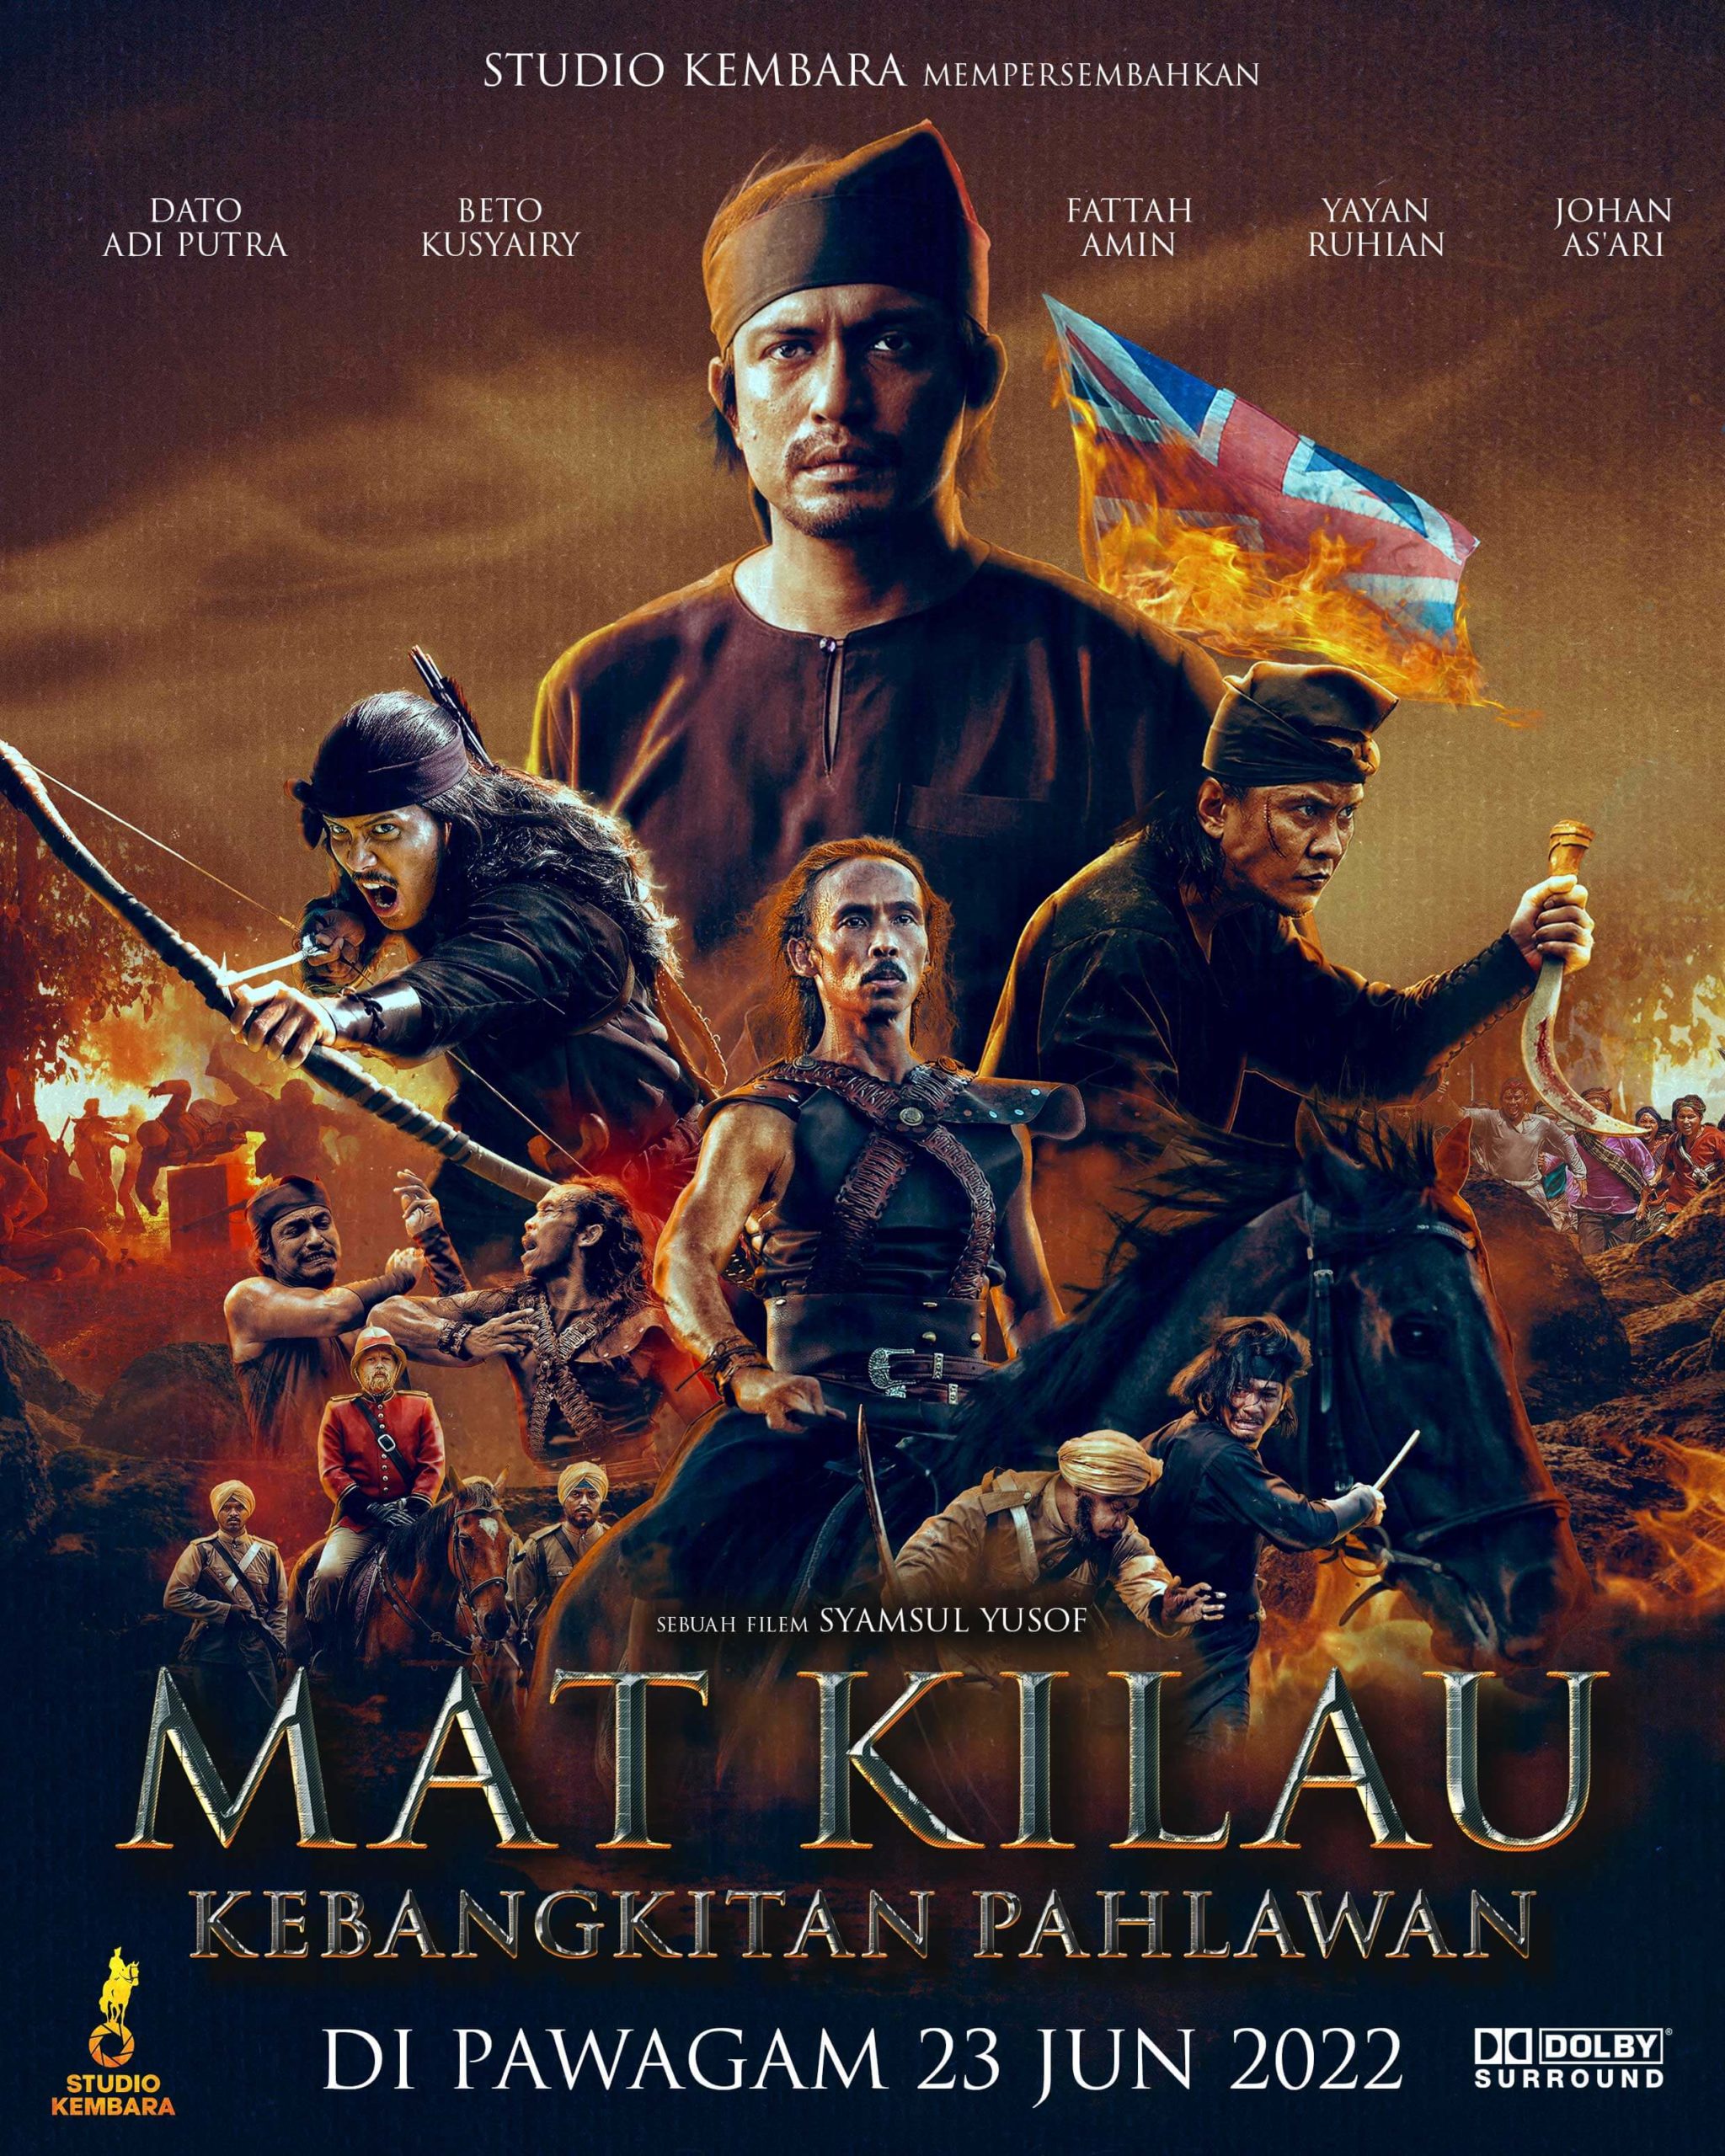 Culture Silat - Culture Silat – Mat Kilau, le film